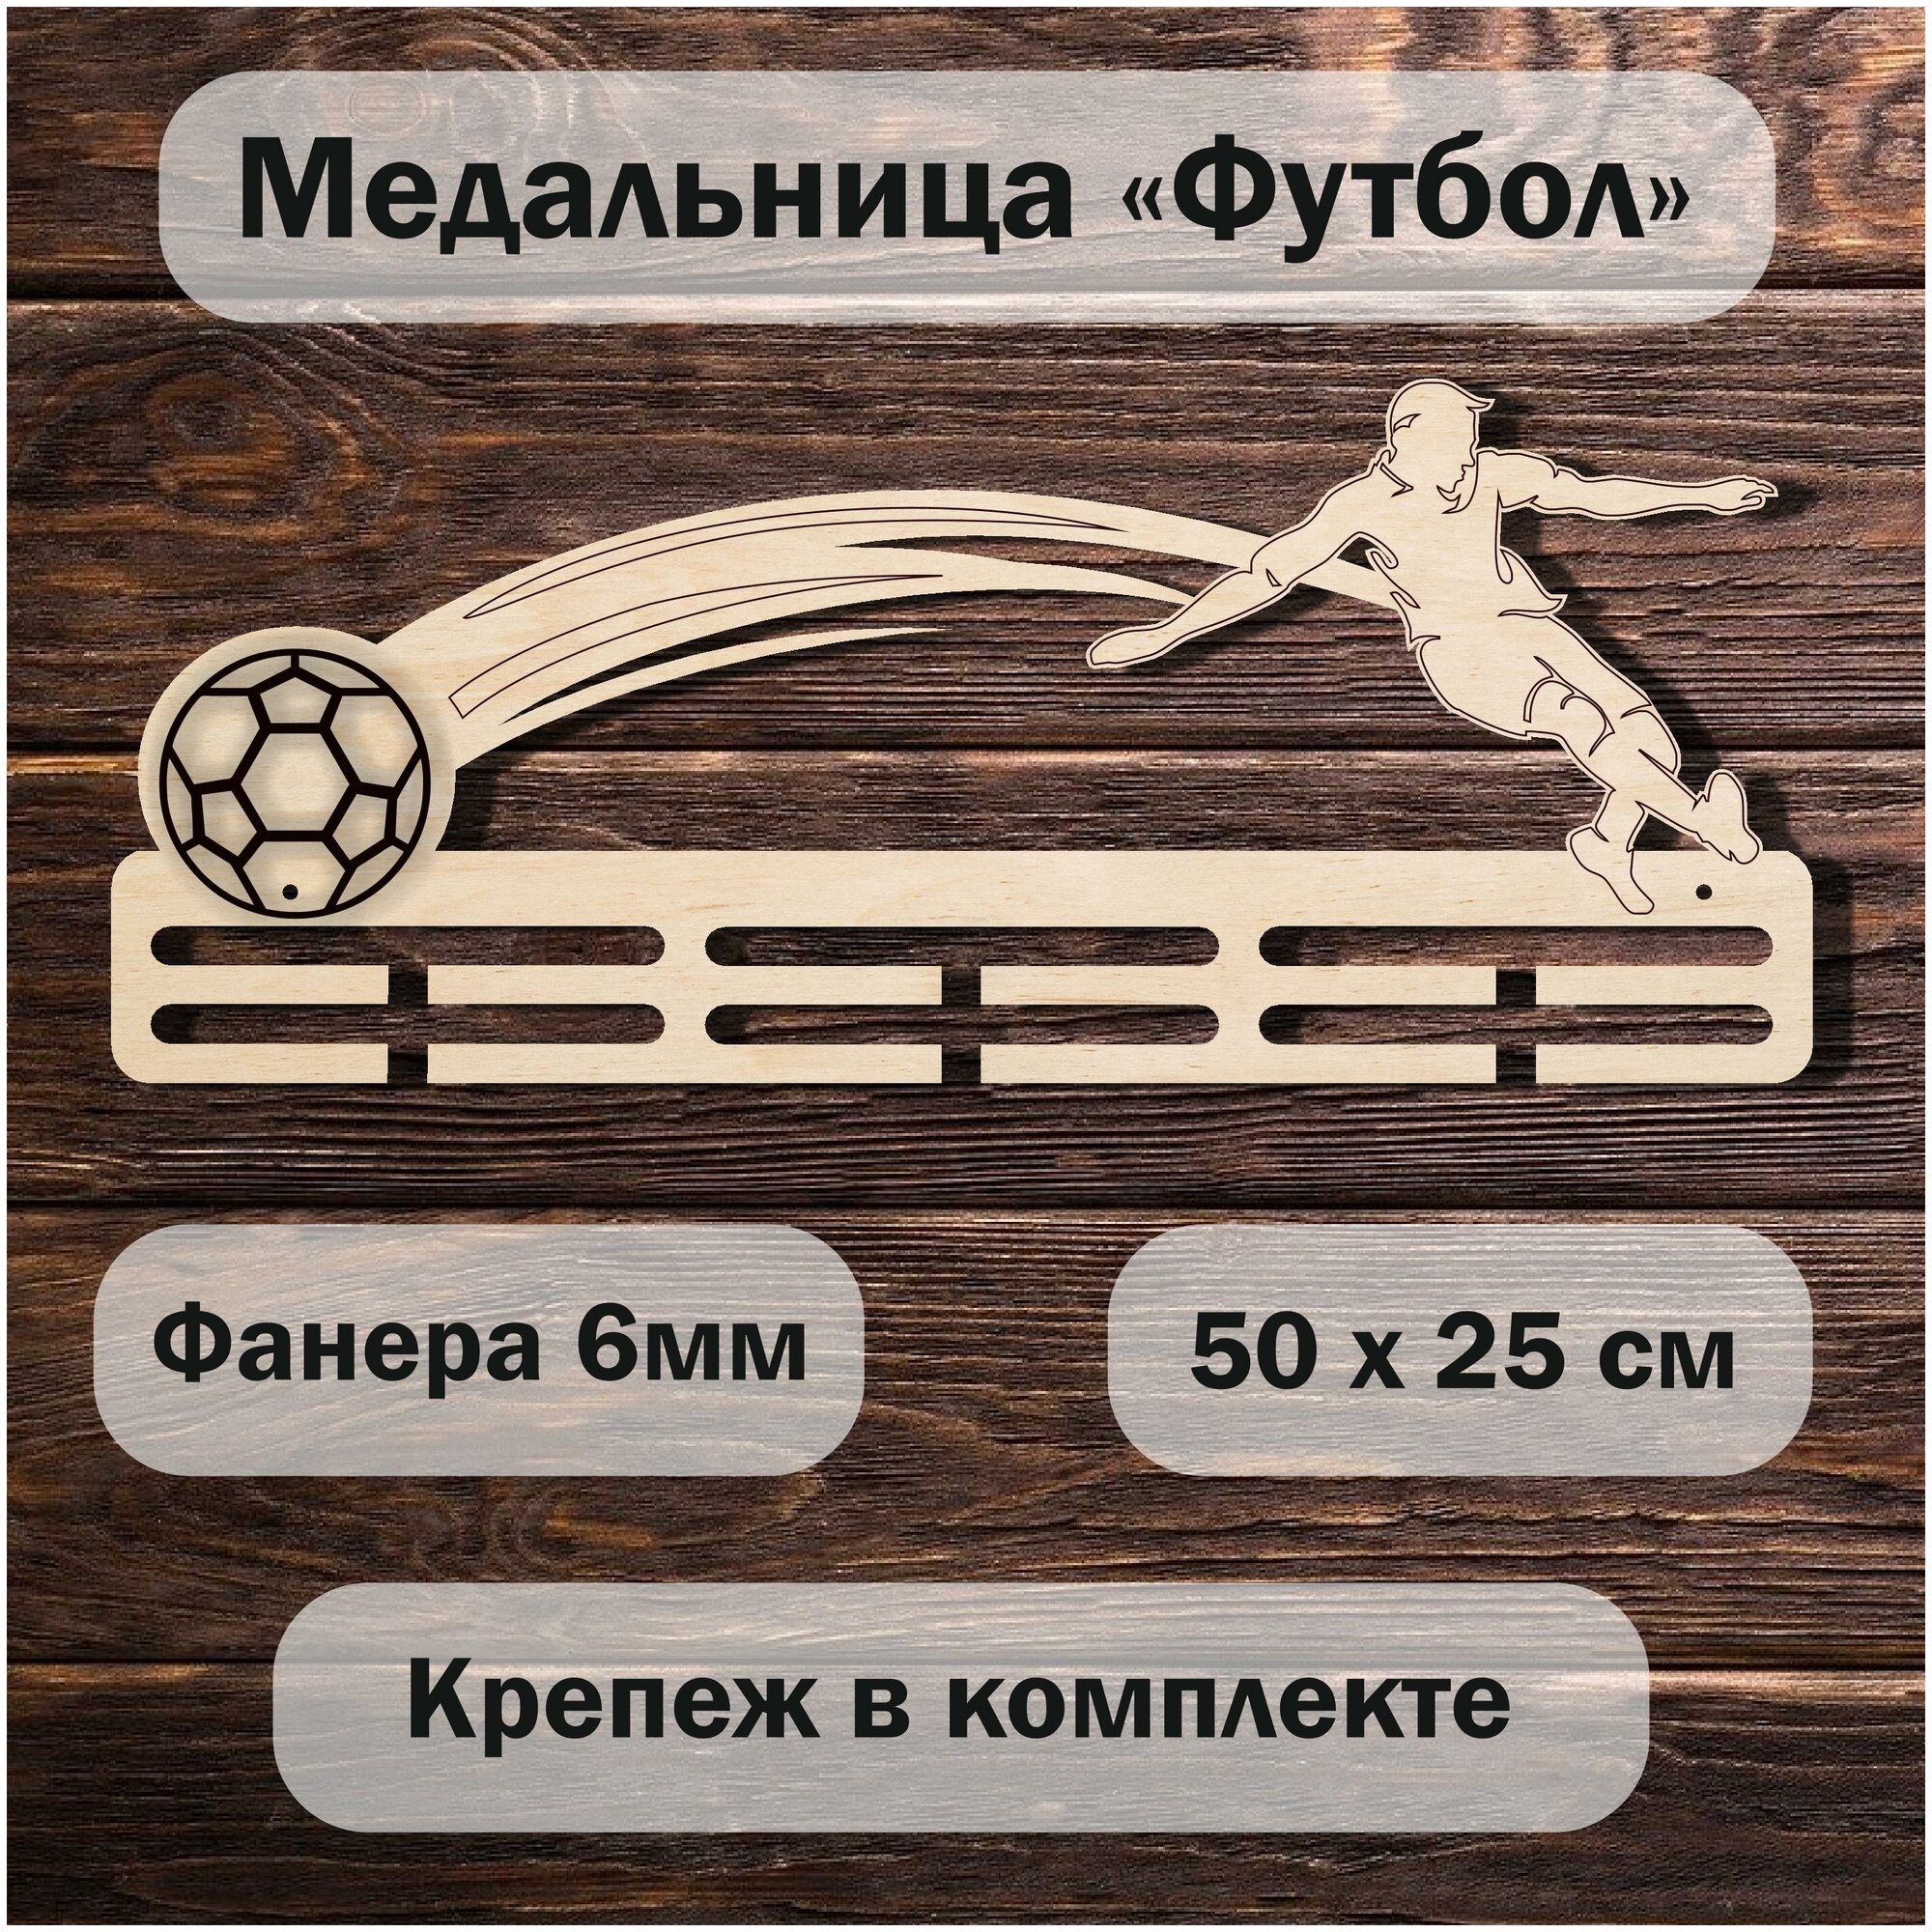 Медальница "футбол" 50*20см.